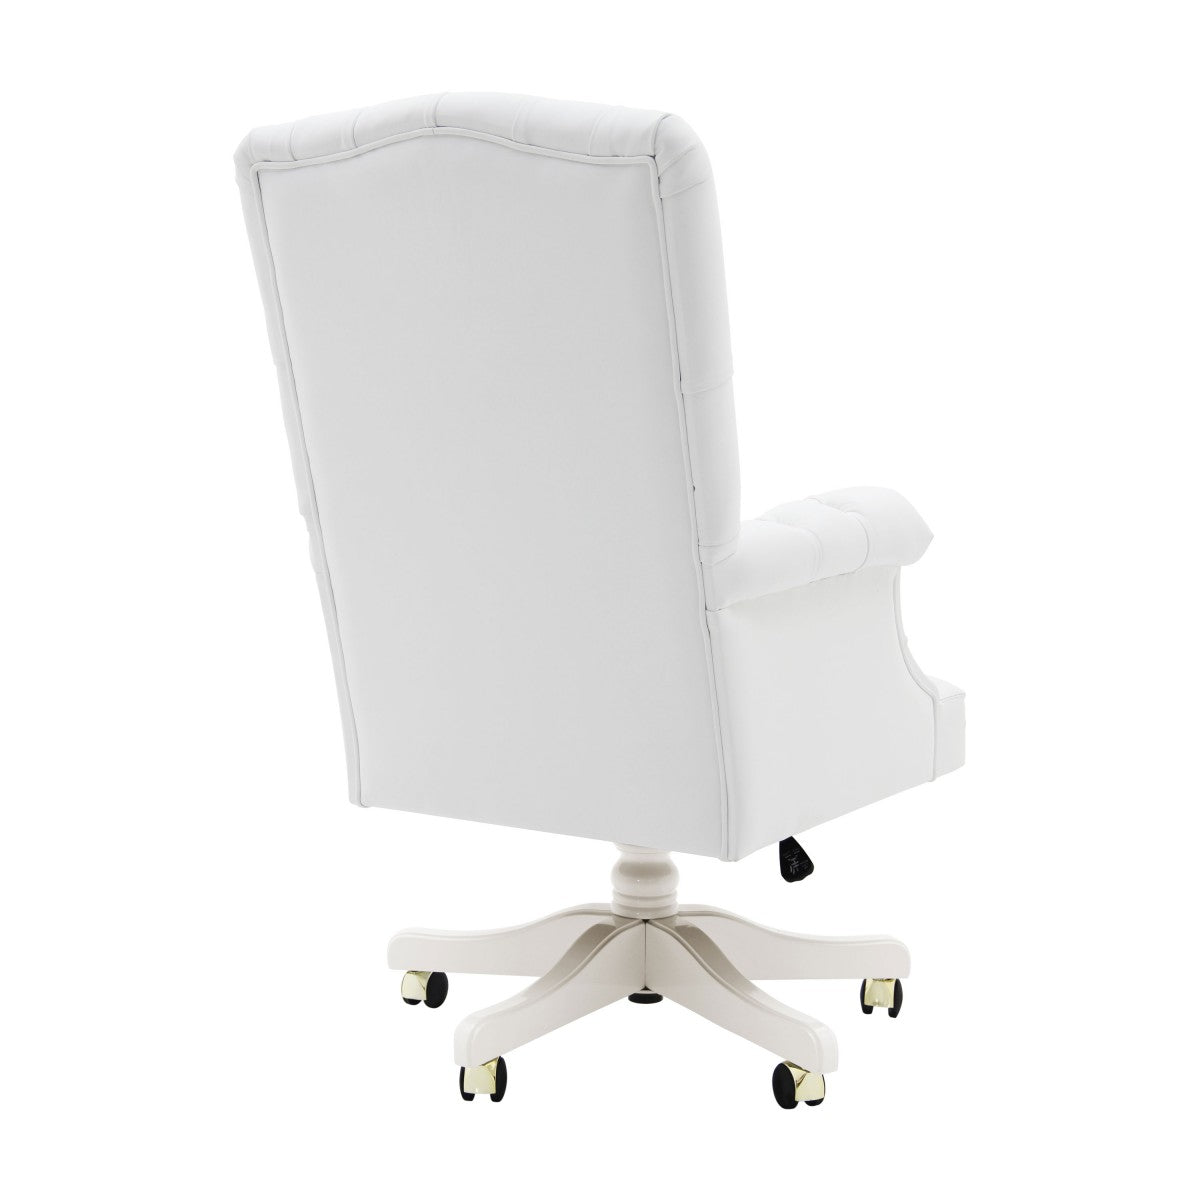 President Bespoke Upholstered Luxury Executive High Back Swivel Office Desk Chair MS105P Custom Made To Order